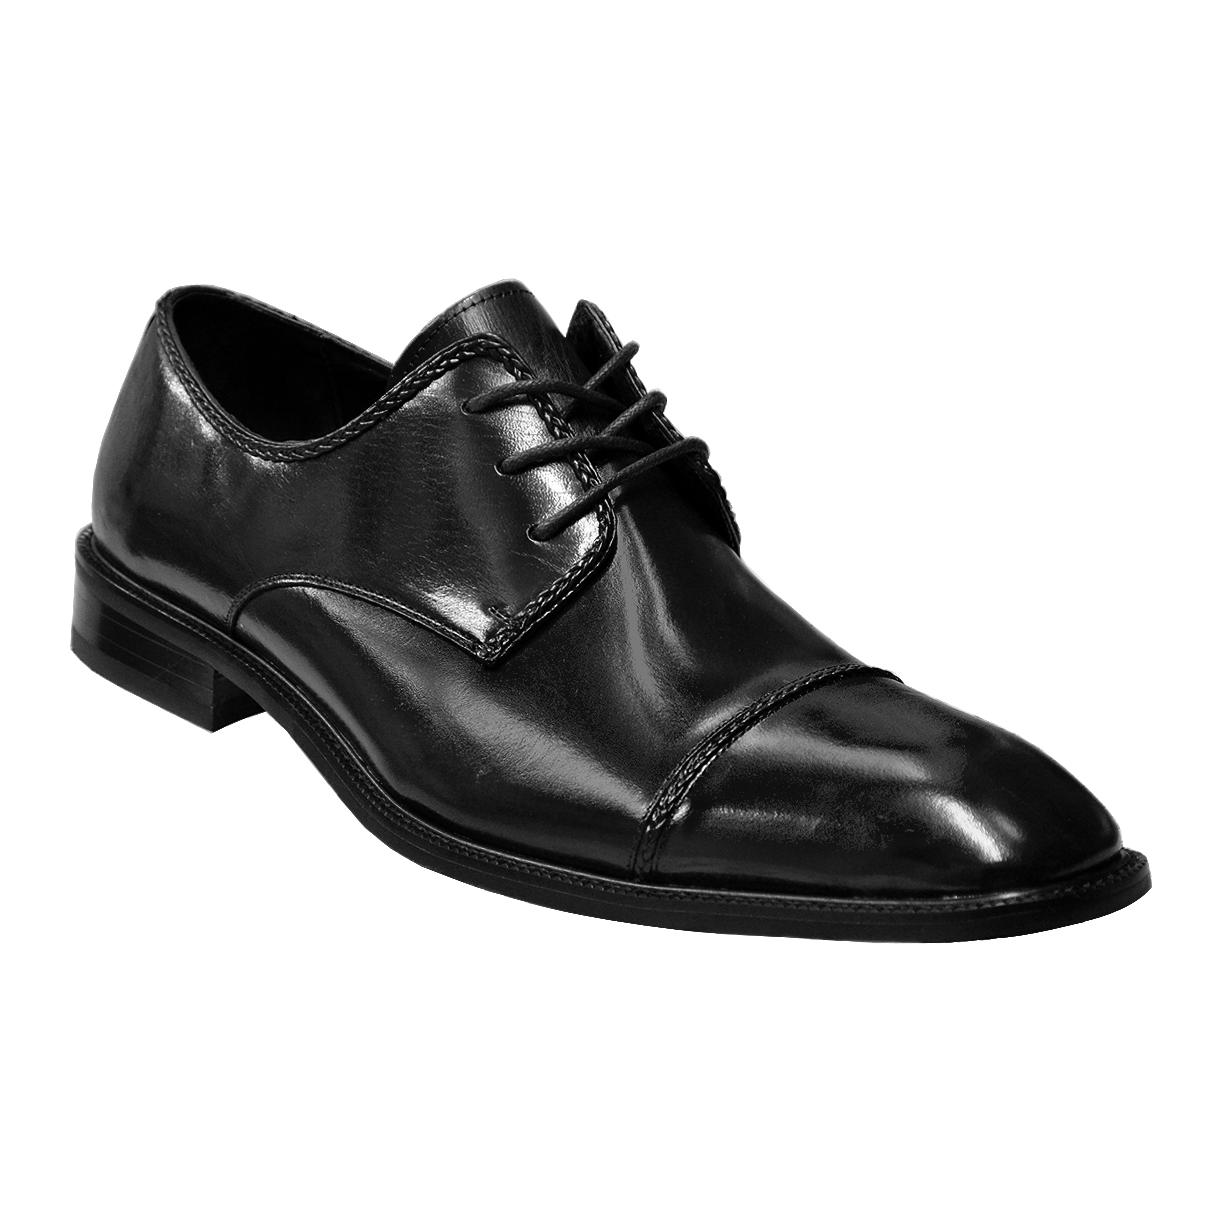 black polished shoes